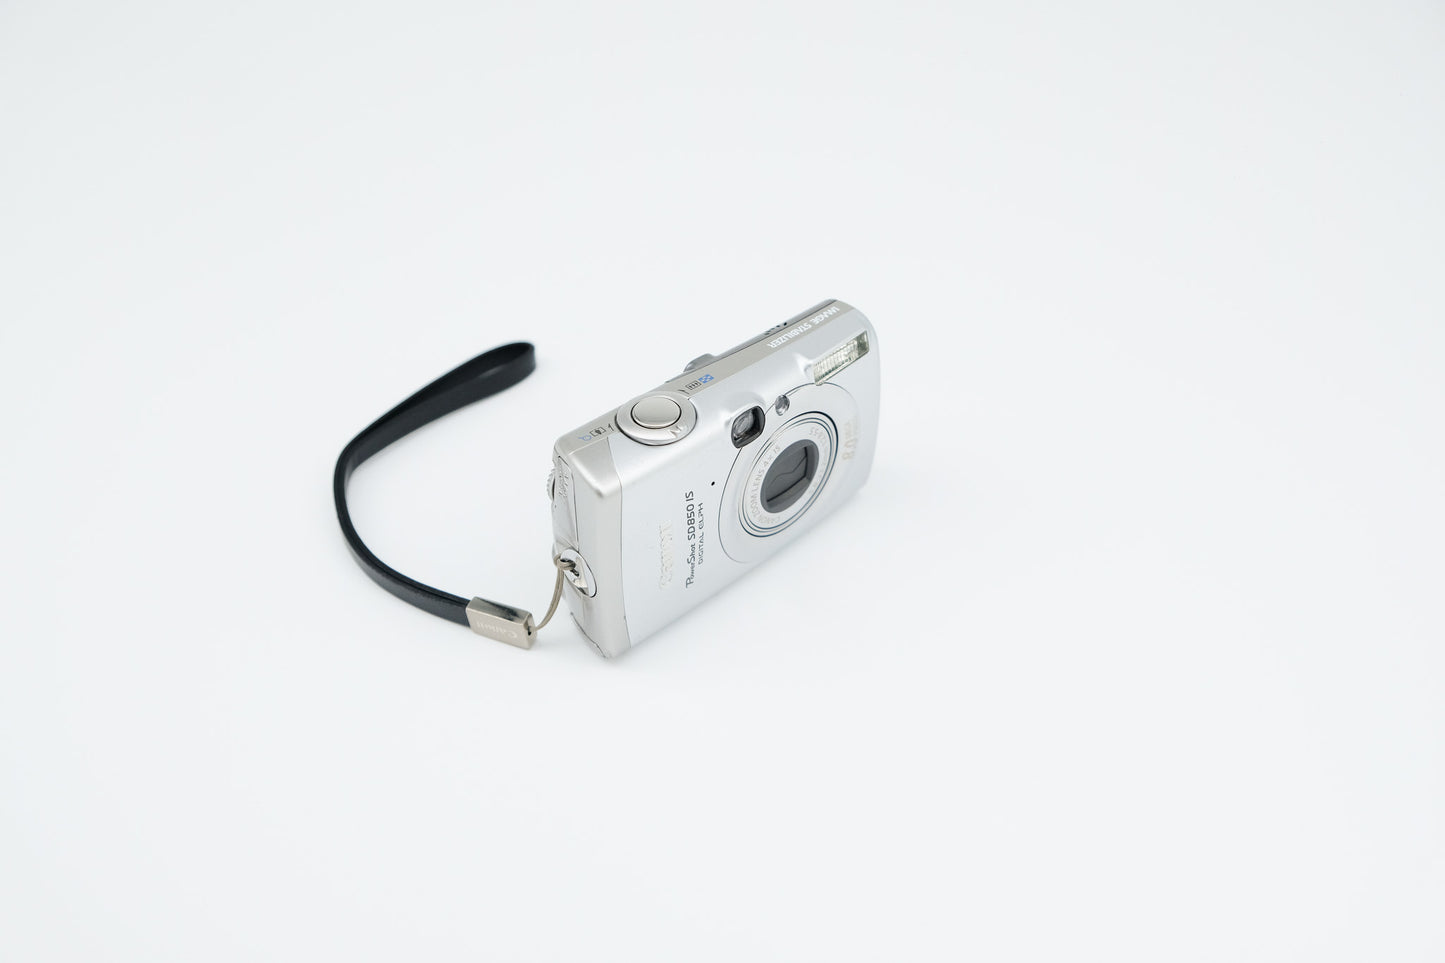 Canon PowerShot SD850 IS - Digicam